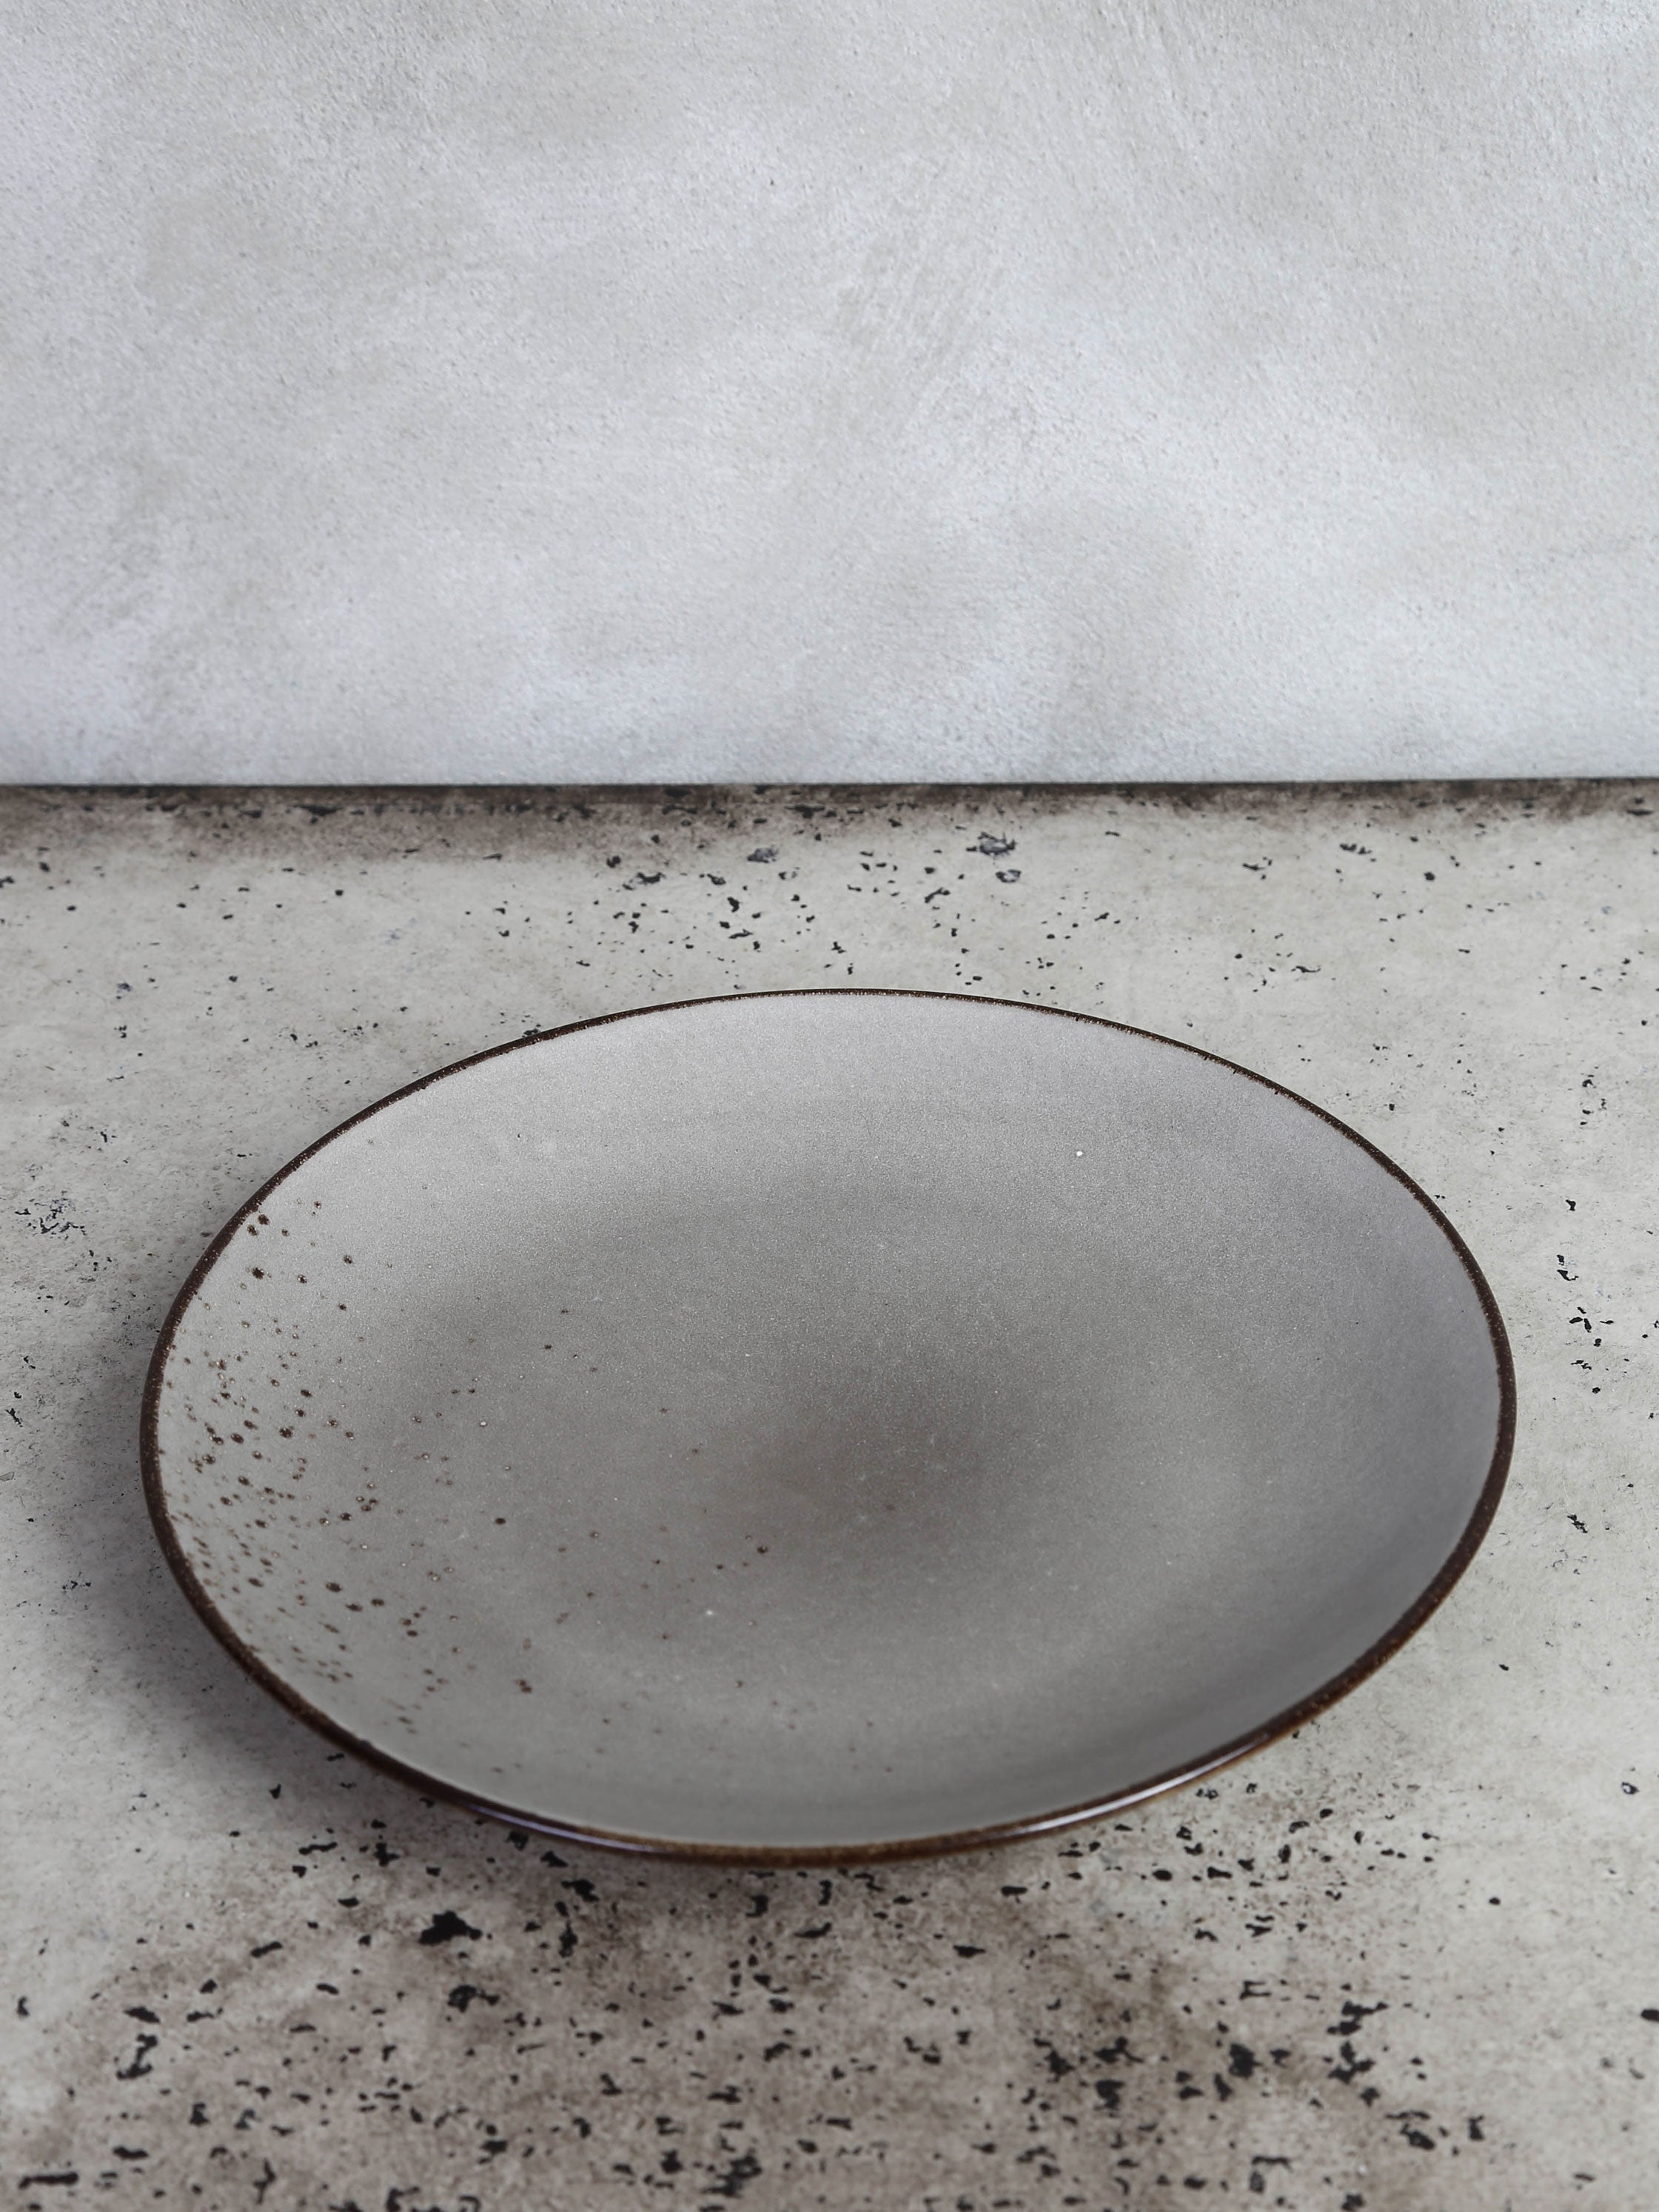 ceramic plate 270 mm